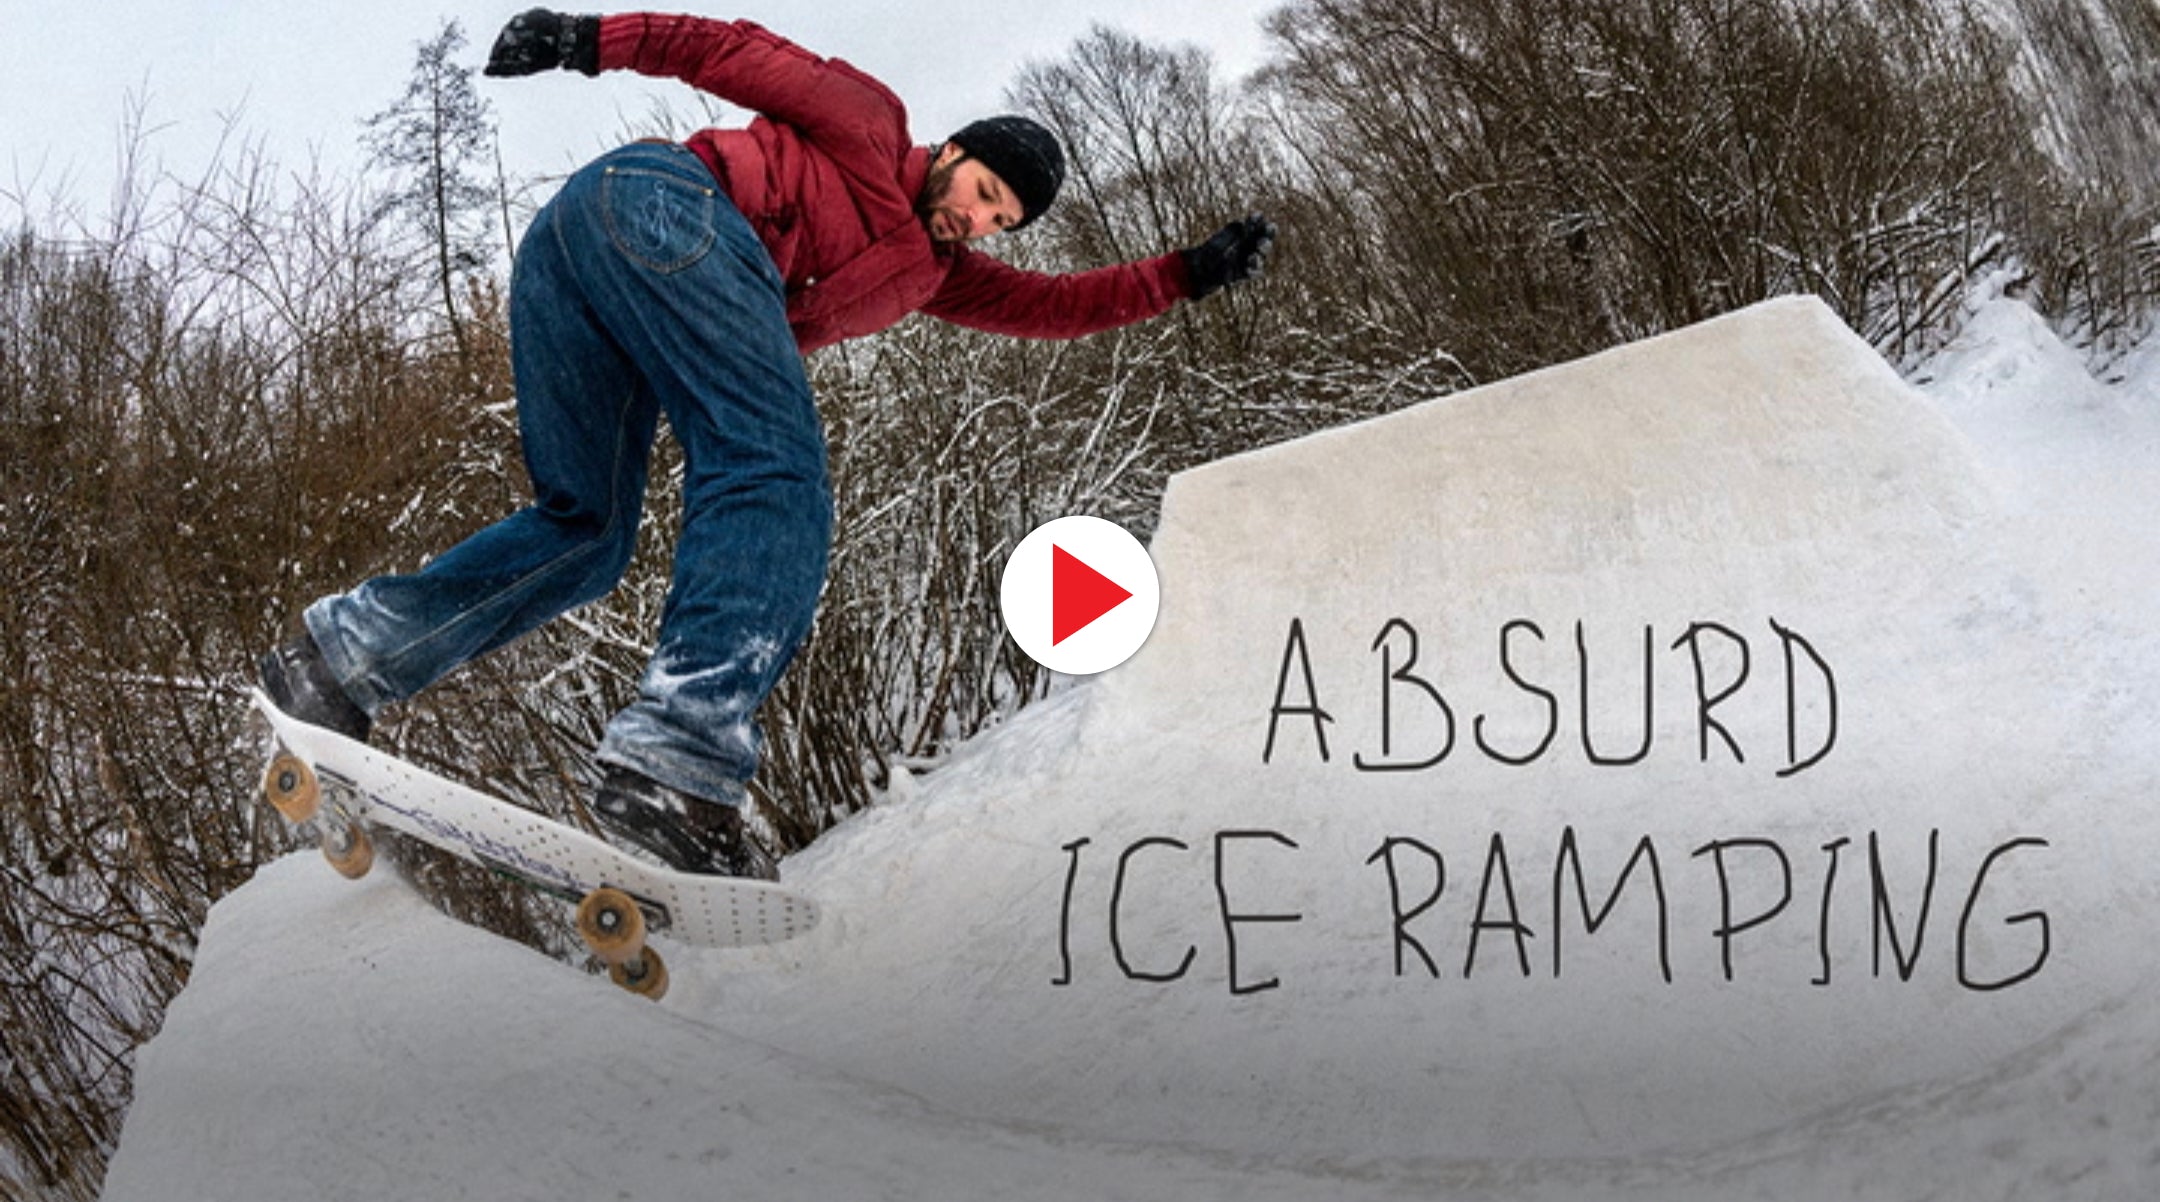 Absurd Ice Ramping!